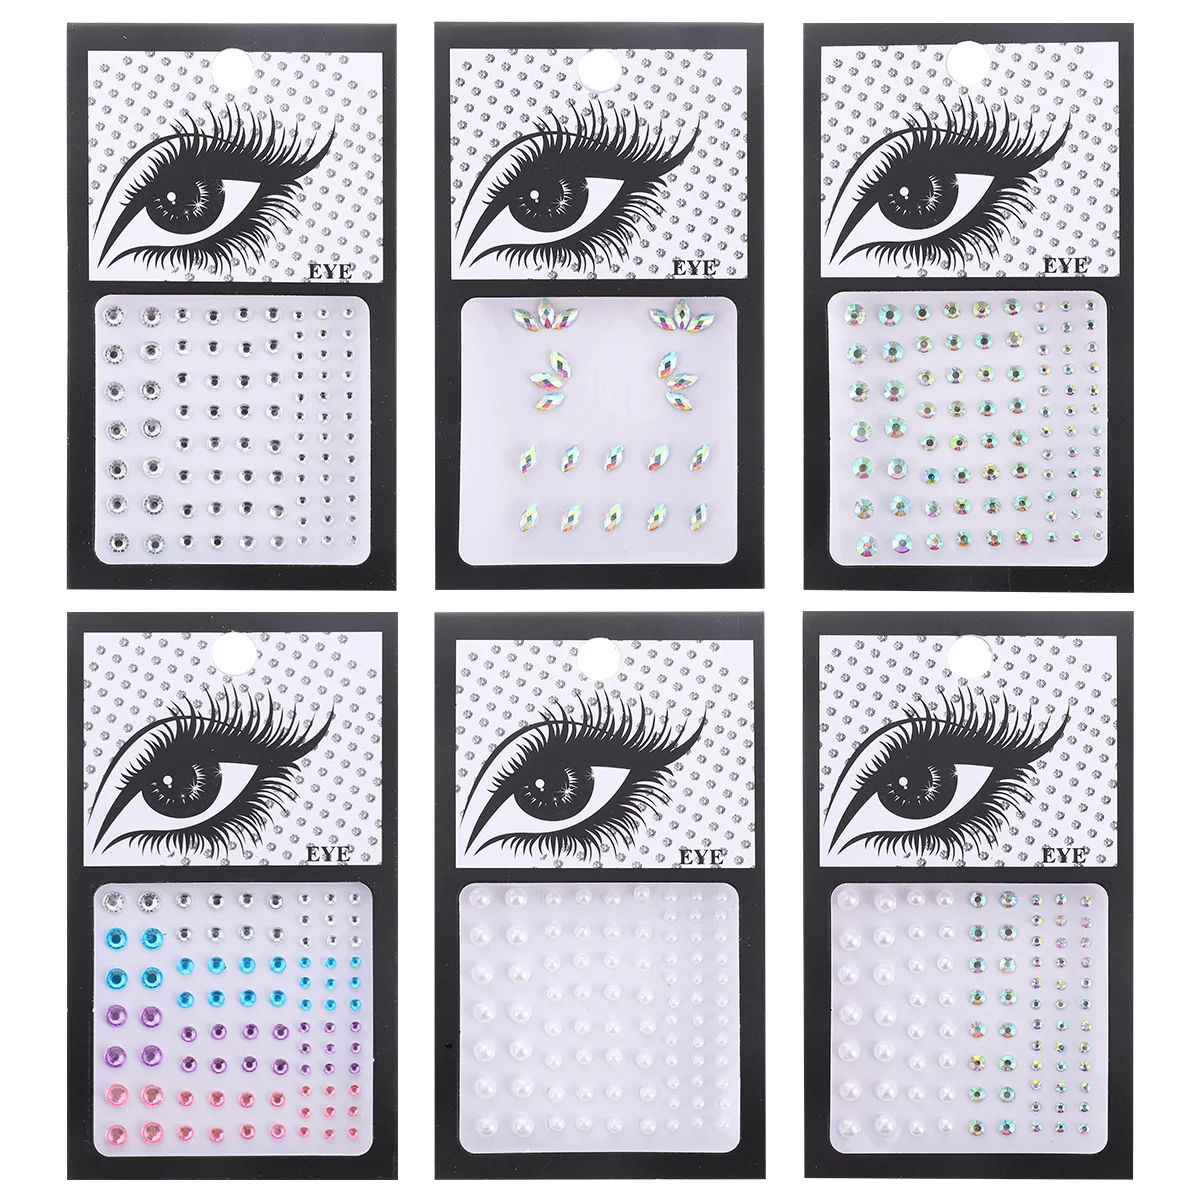 

6 Sheets Face Rhinestone Stickers Eye Girls' Jewelry Gems Glitter Body Earth Tones